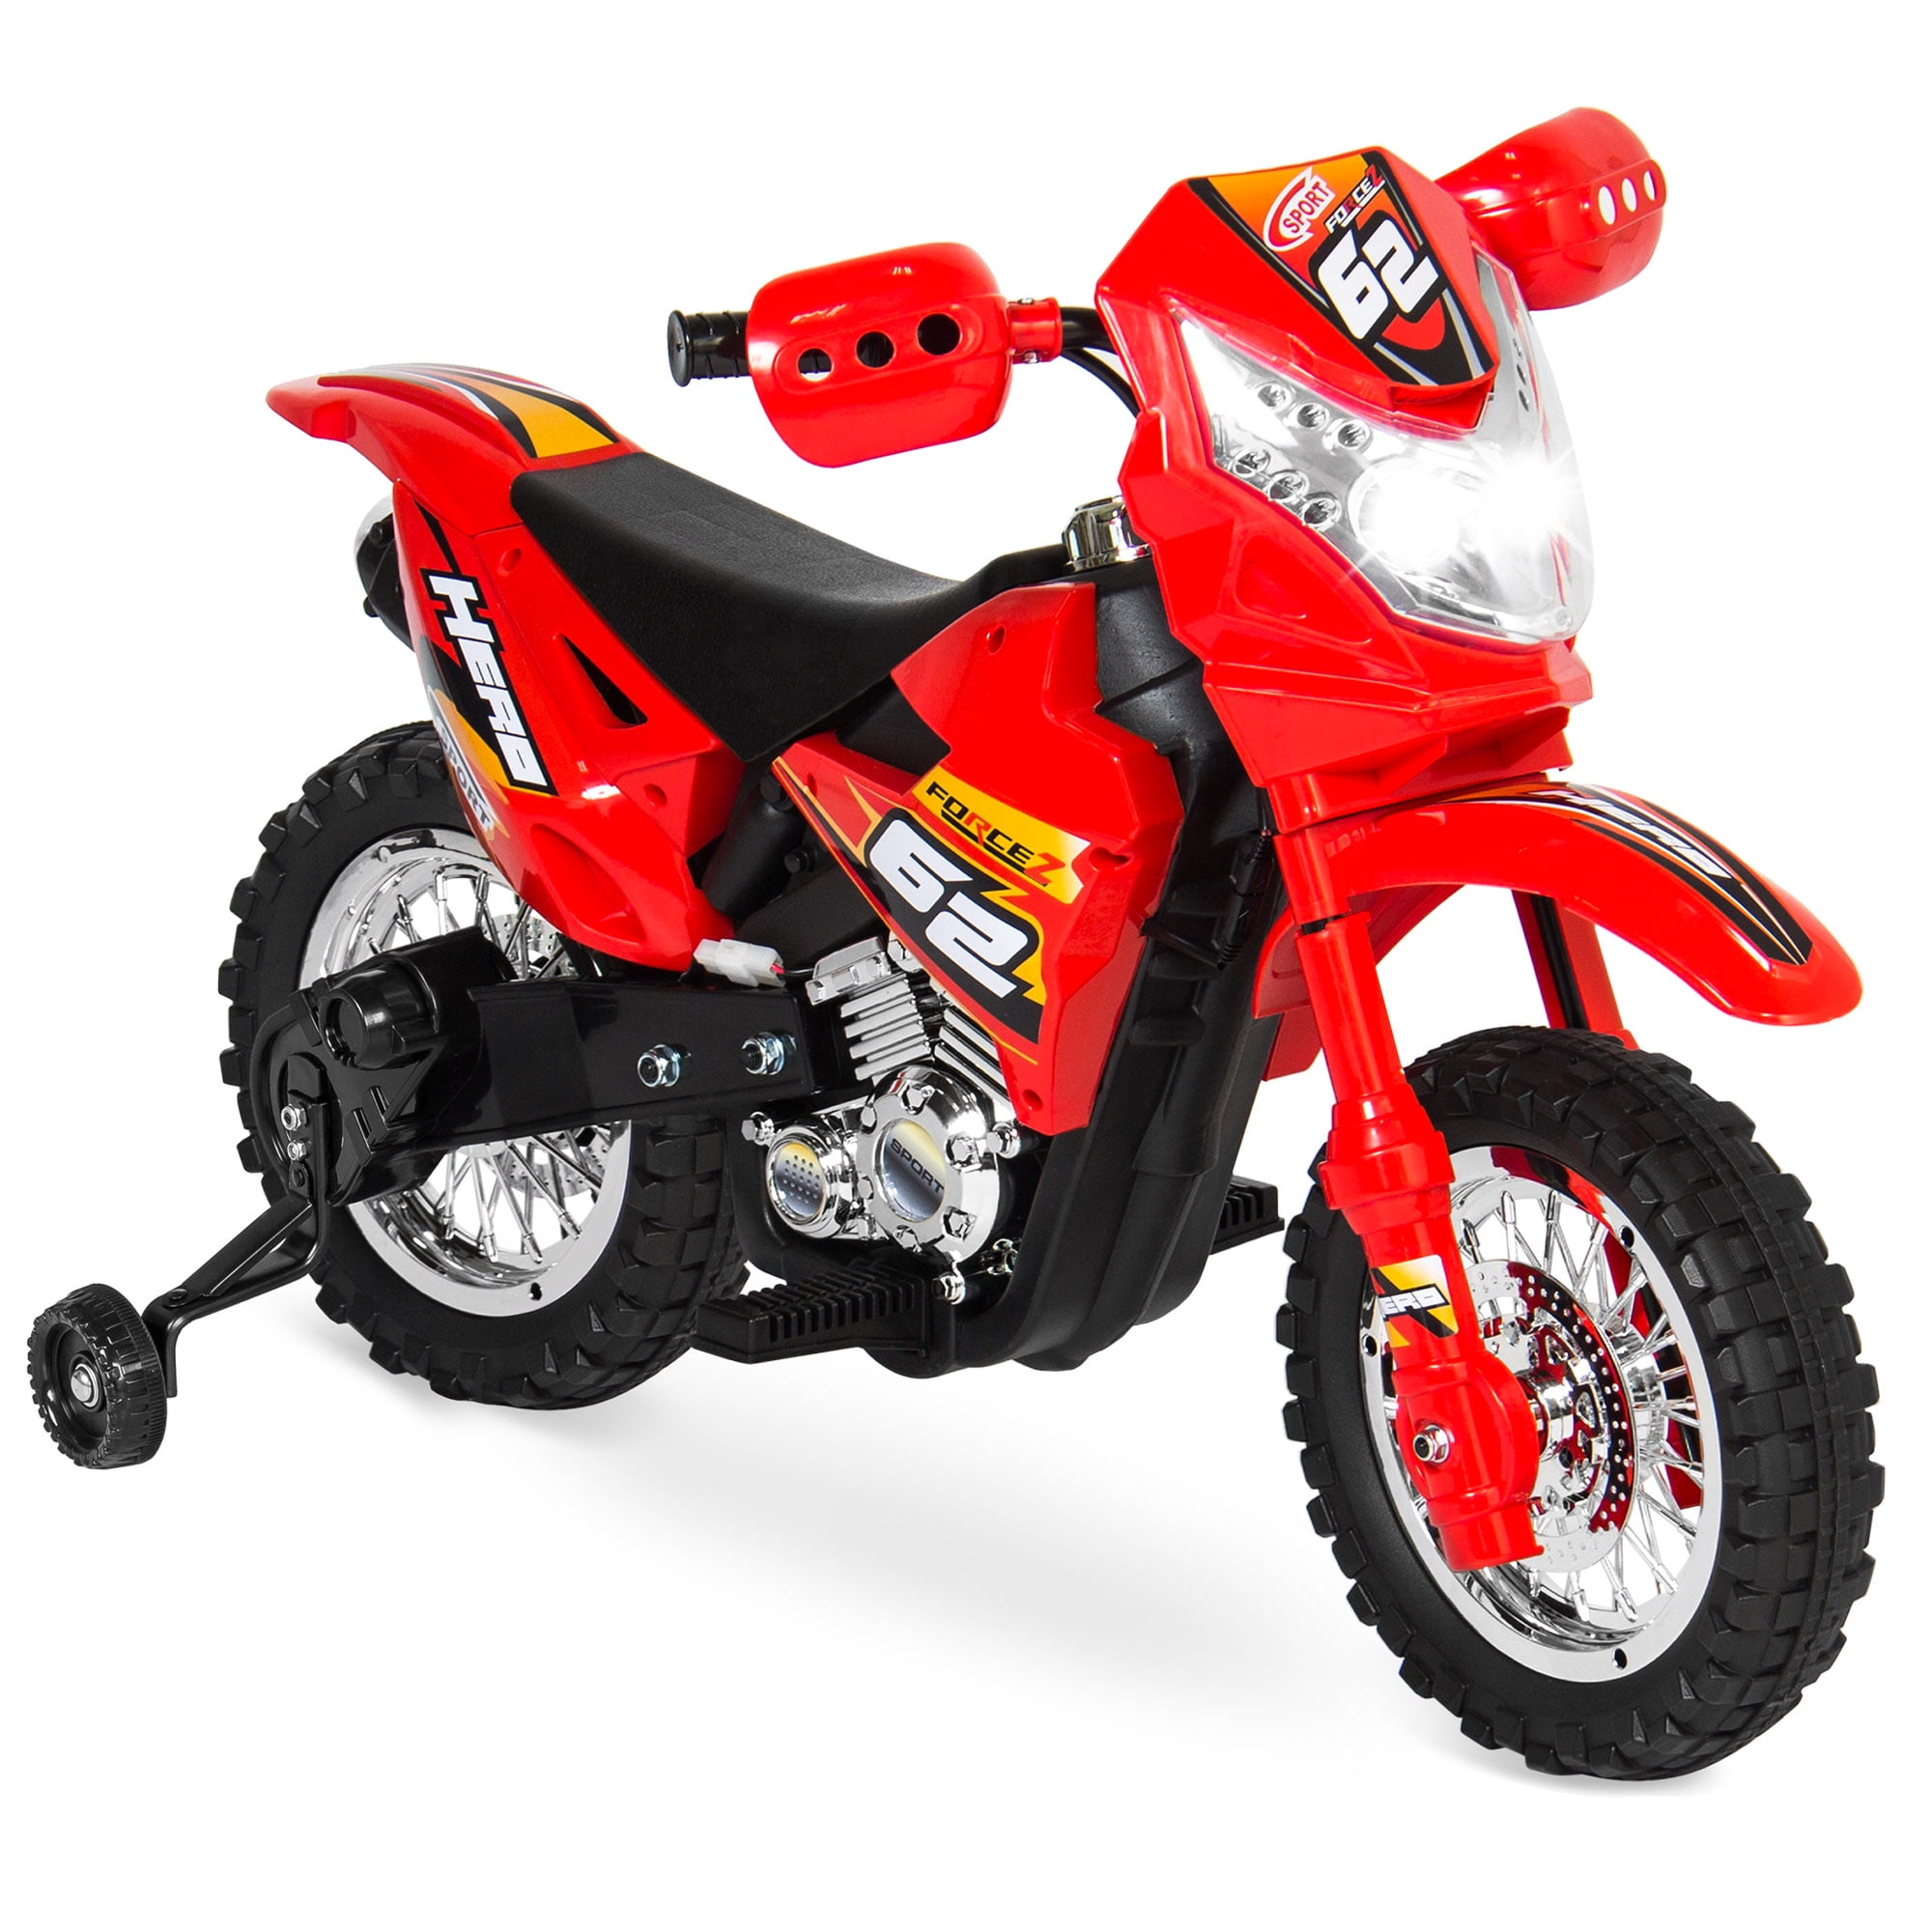 stickers FIGHTER BIRD-Sport bike Graphics motorcycle decals